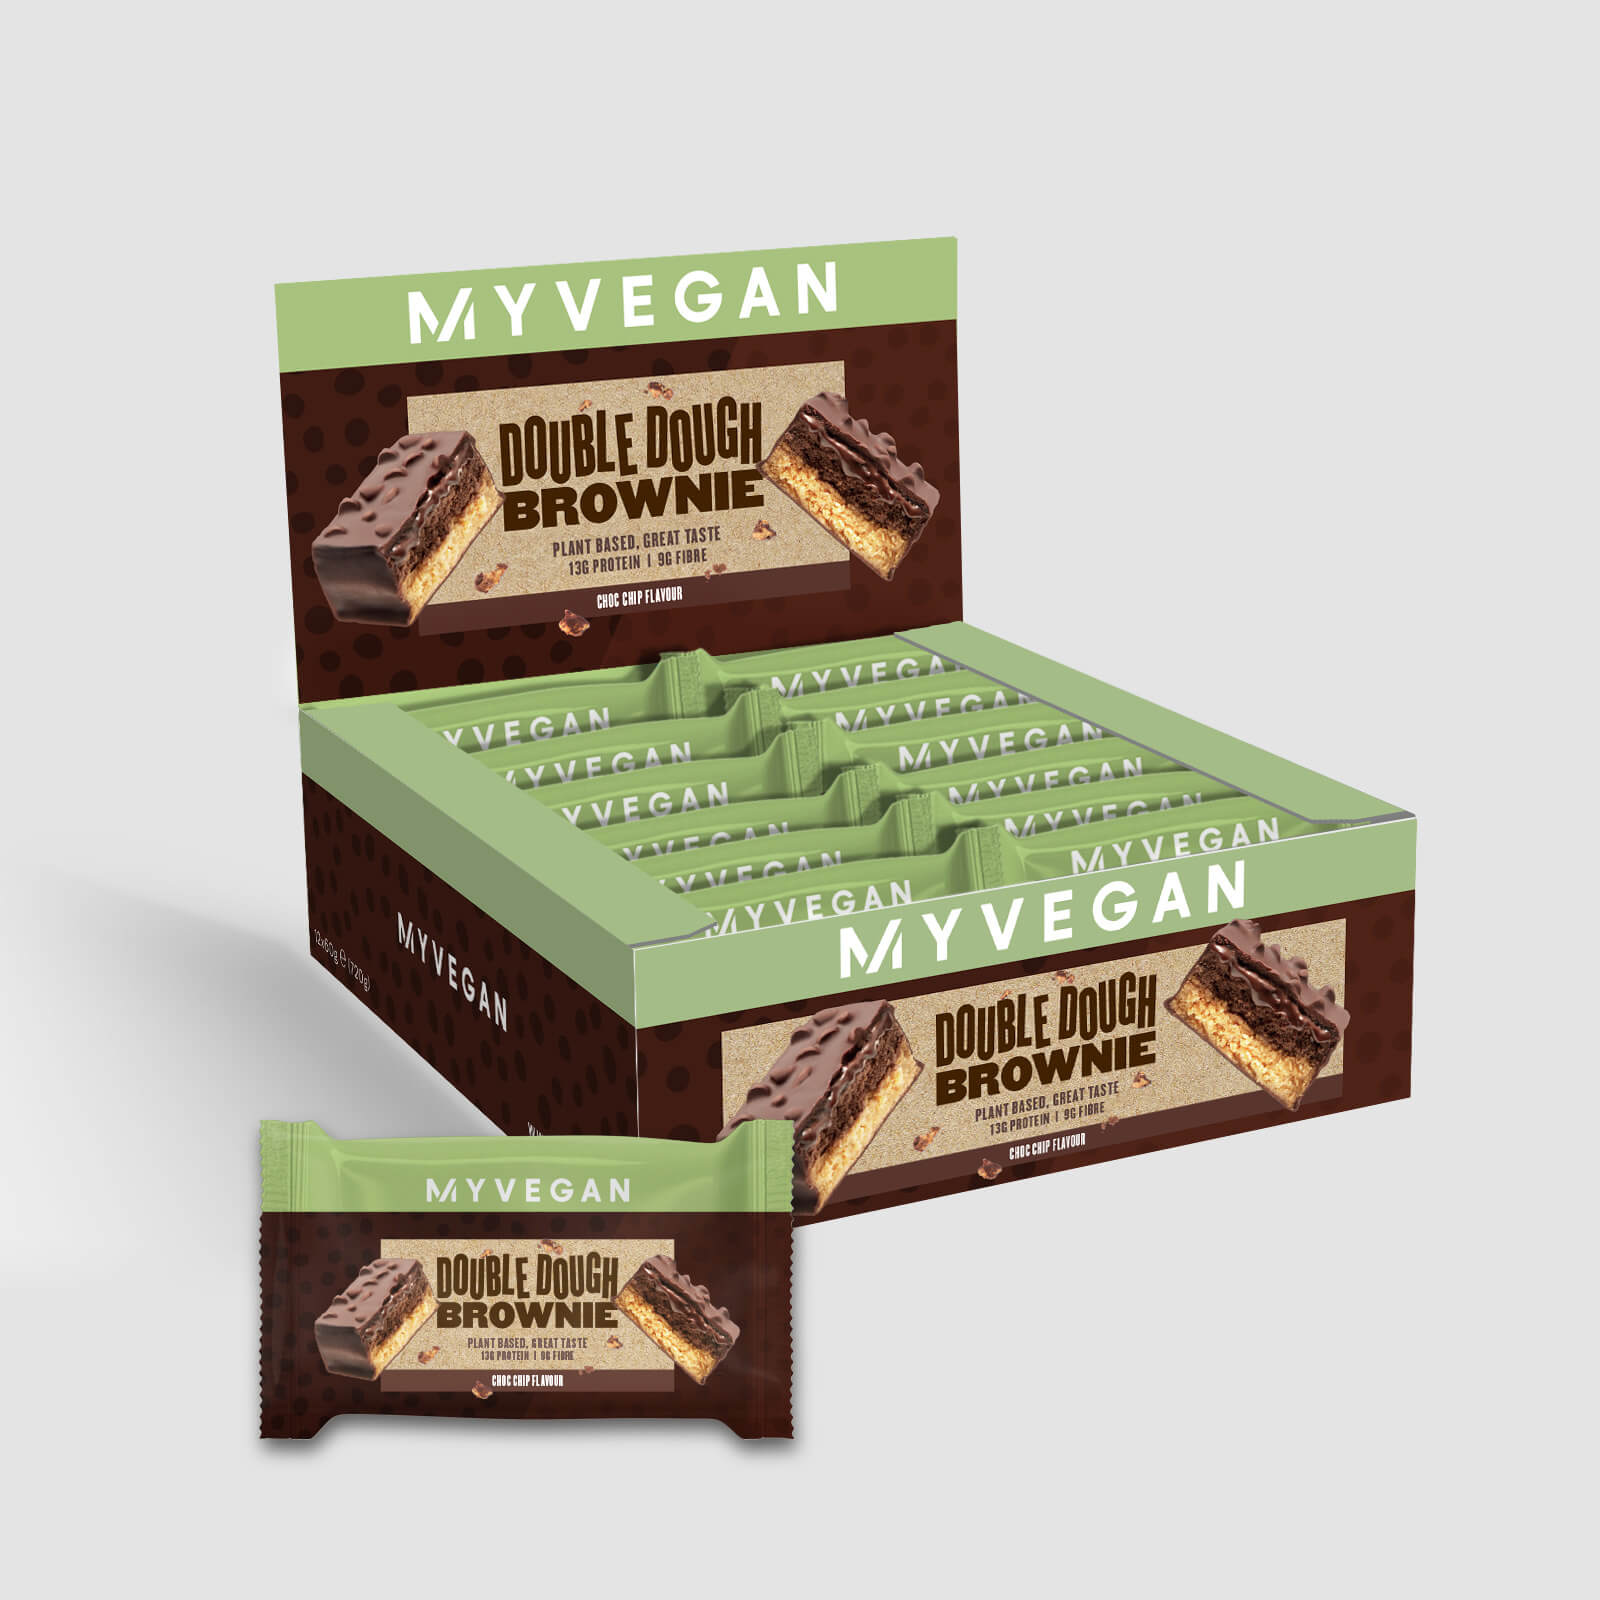 Myvegan Vegan Double Dough Brownie - Chocolate Chip